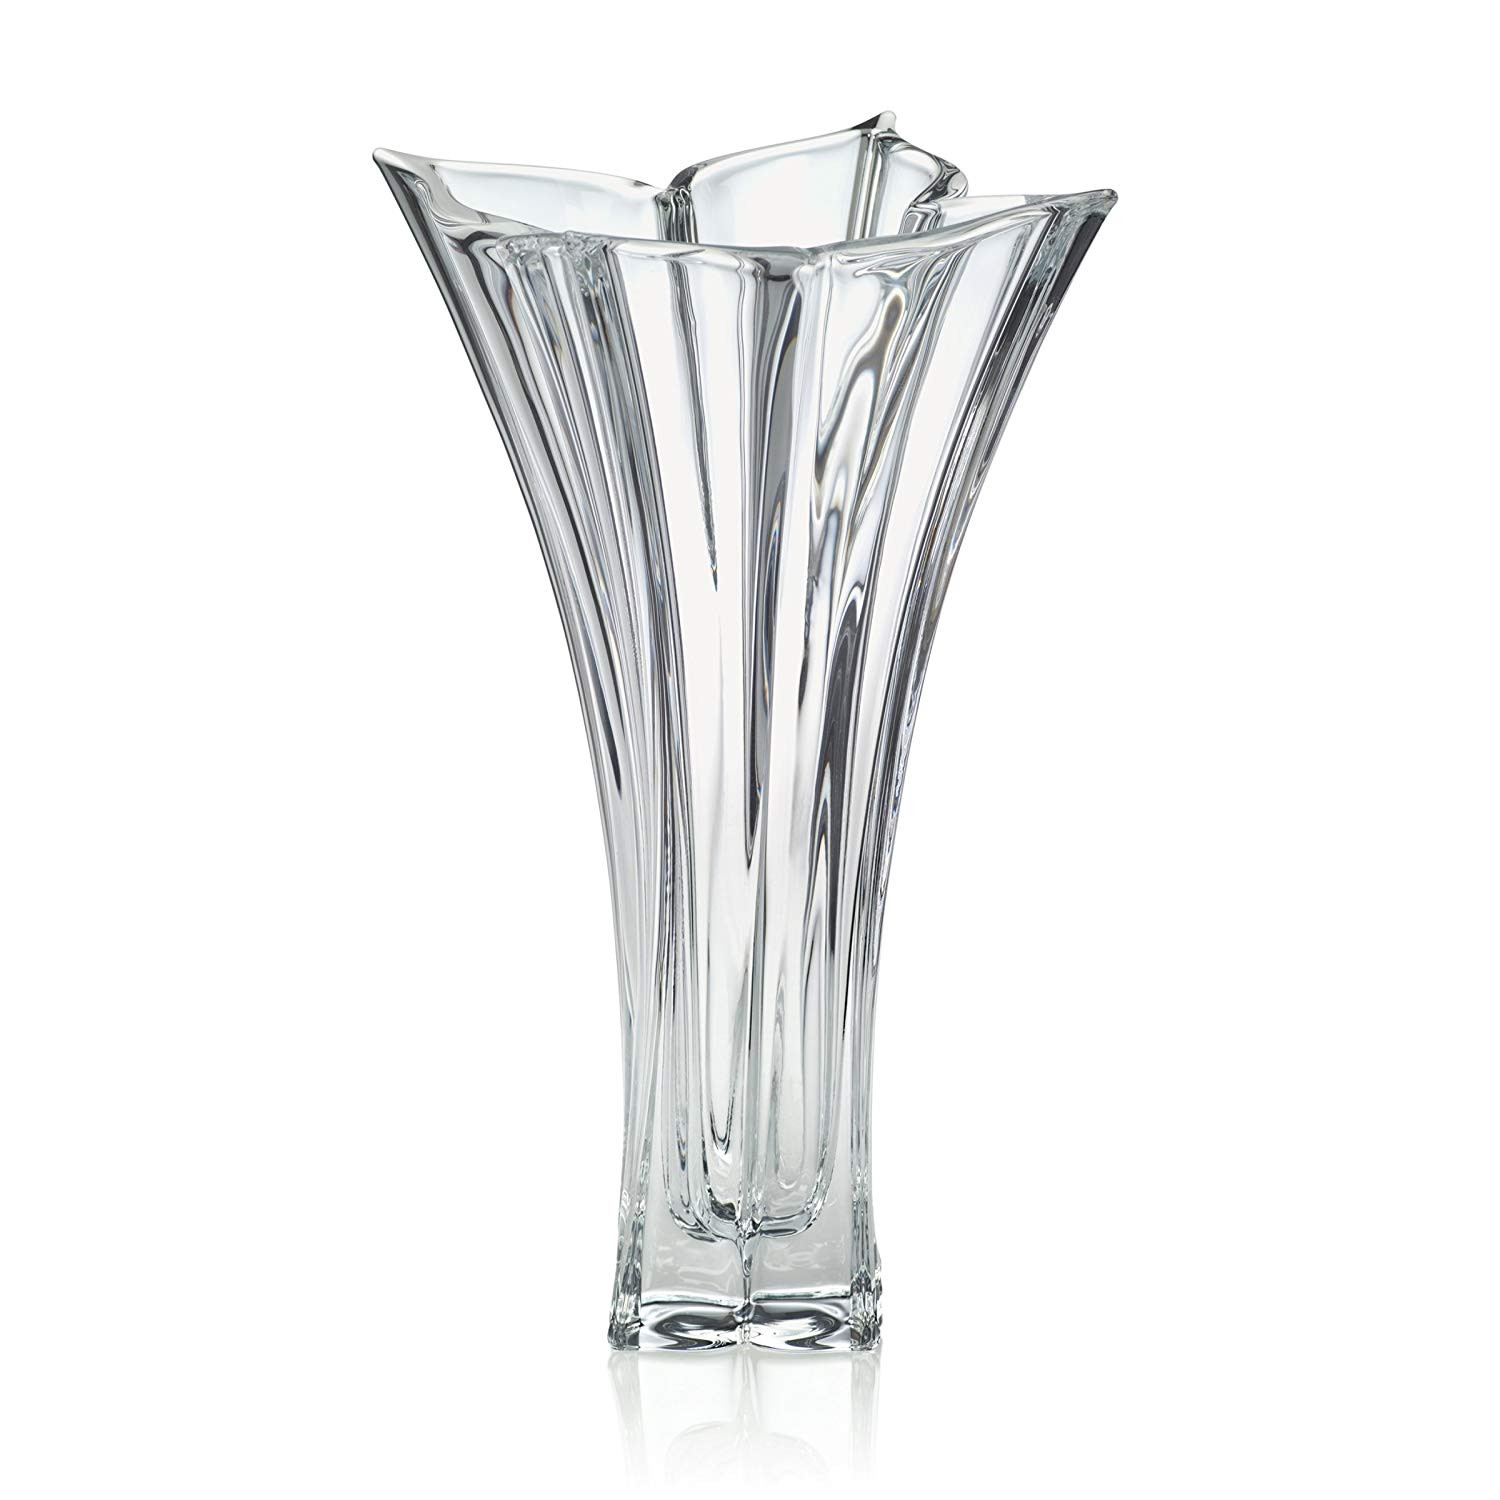 23 Ideal Jozefina Art Glass Vase 2024 free download jozefina art glass vase of amazon com mikasa crystal florale crystal vase 14 inch home kitchen with regard to 810frtzhvvl sl1500